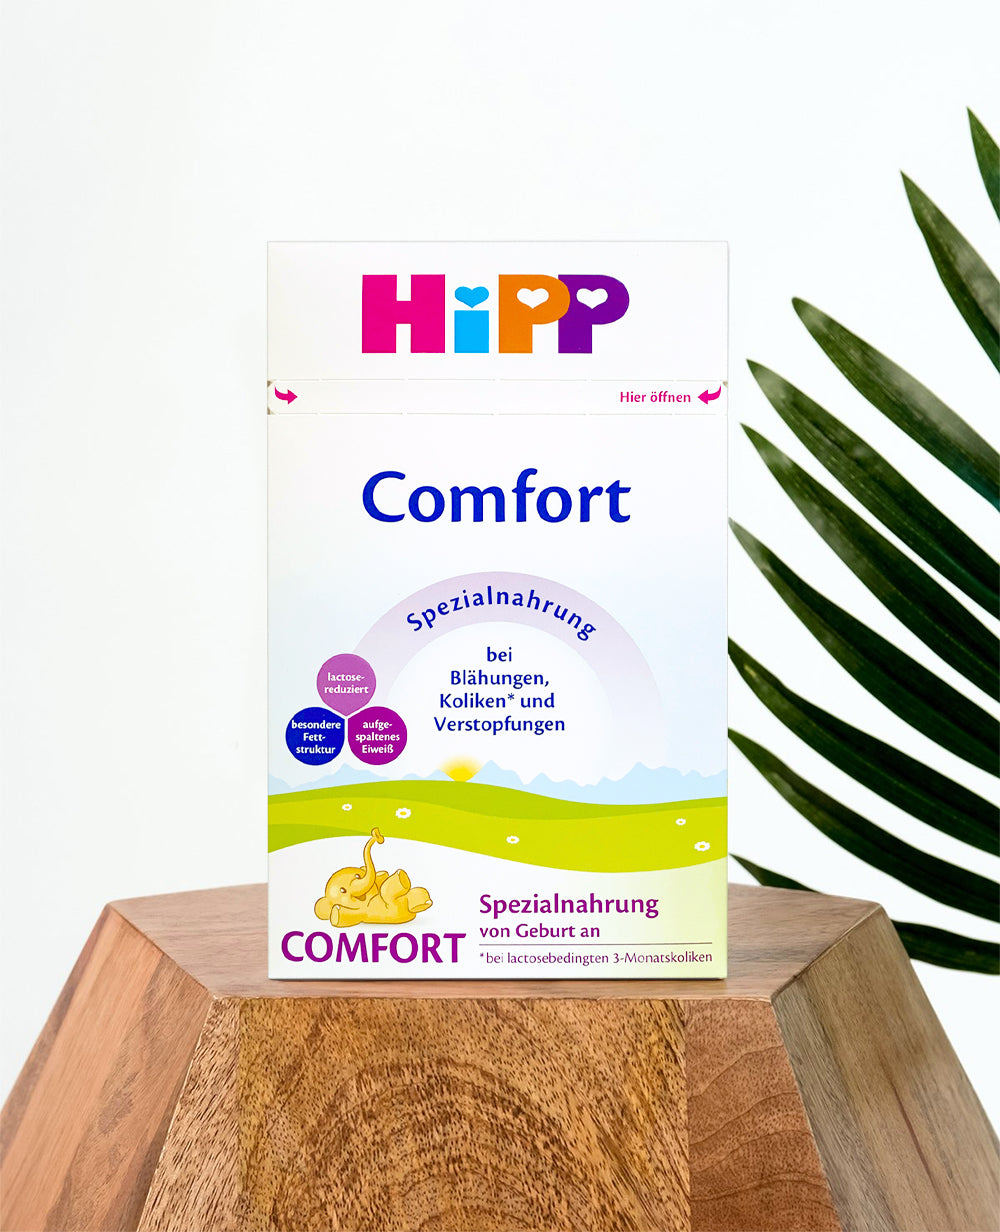 HiPP Comfort Milk Formula